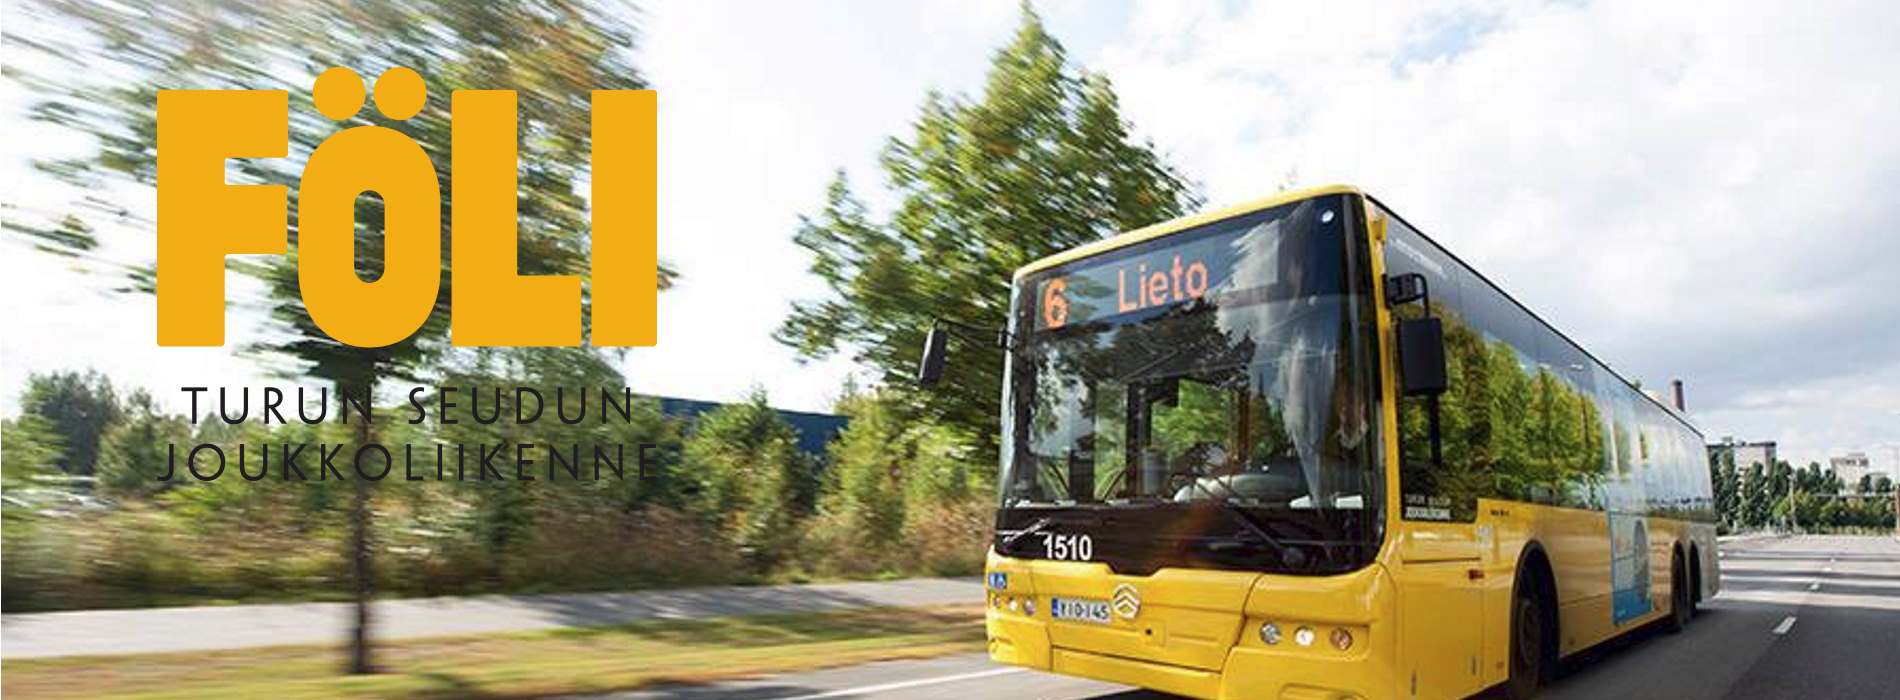 Föli: Single ticket experience for multi-modal travel and events in Turku region